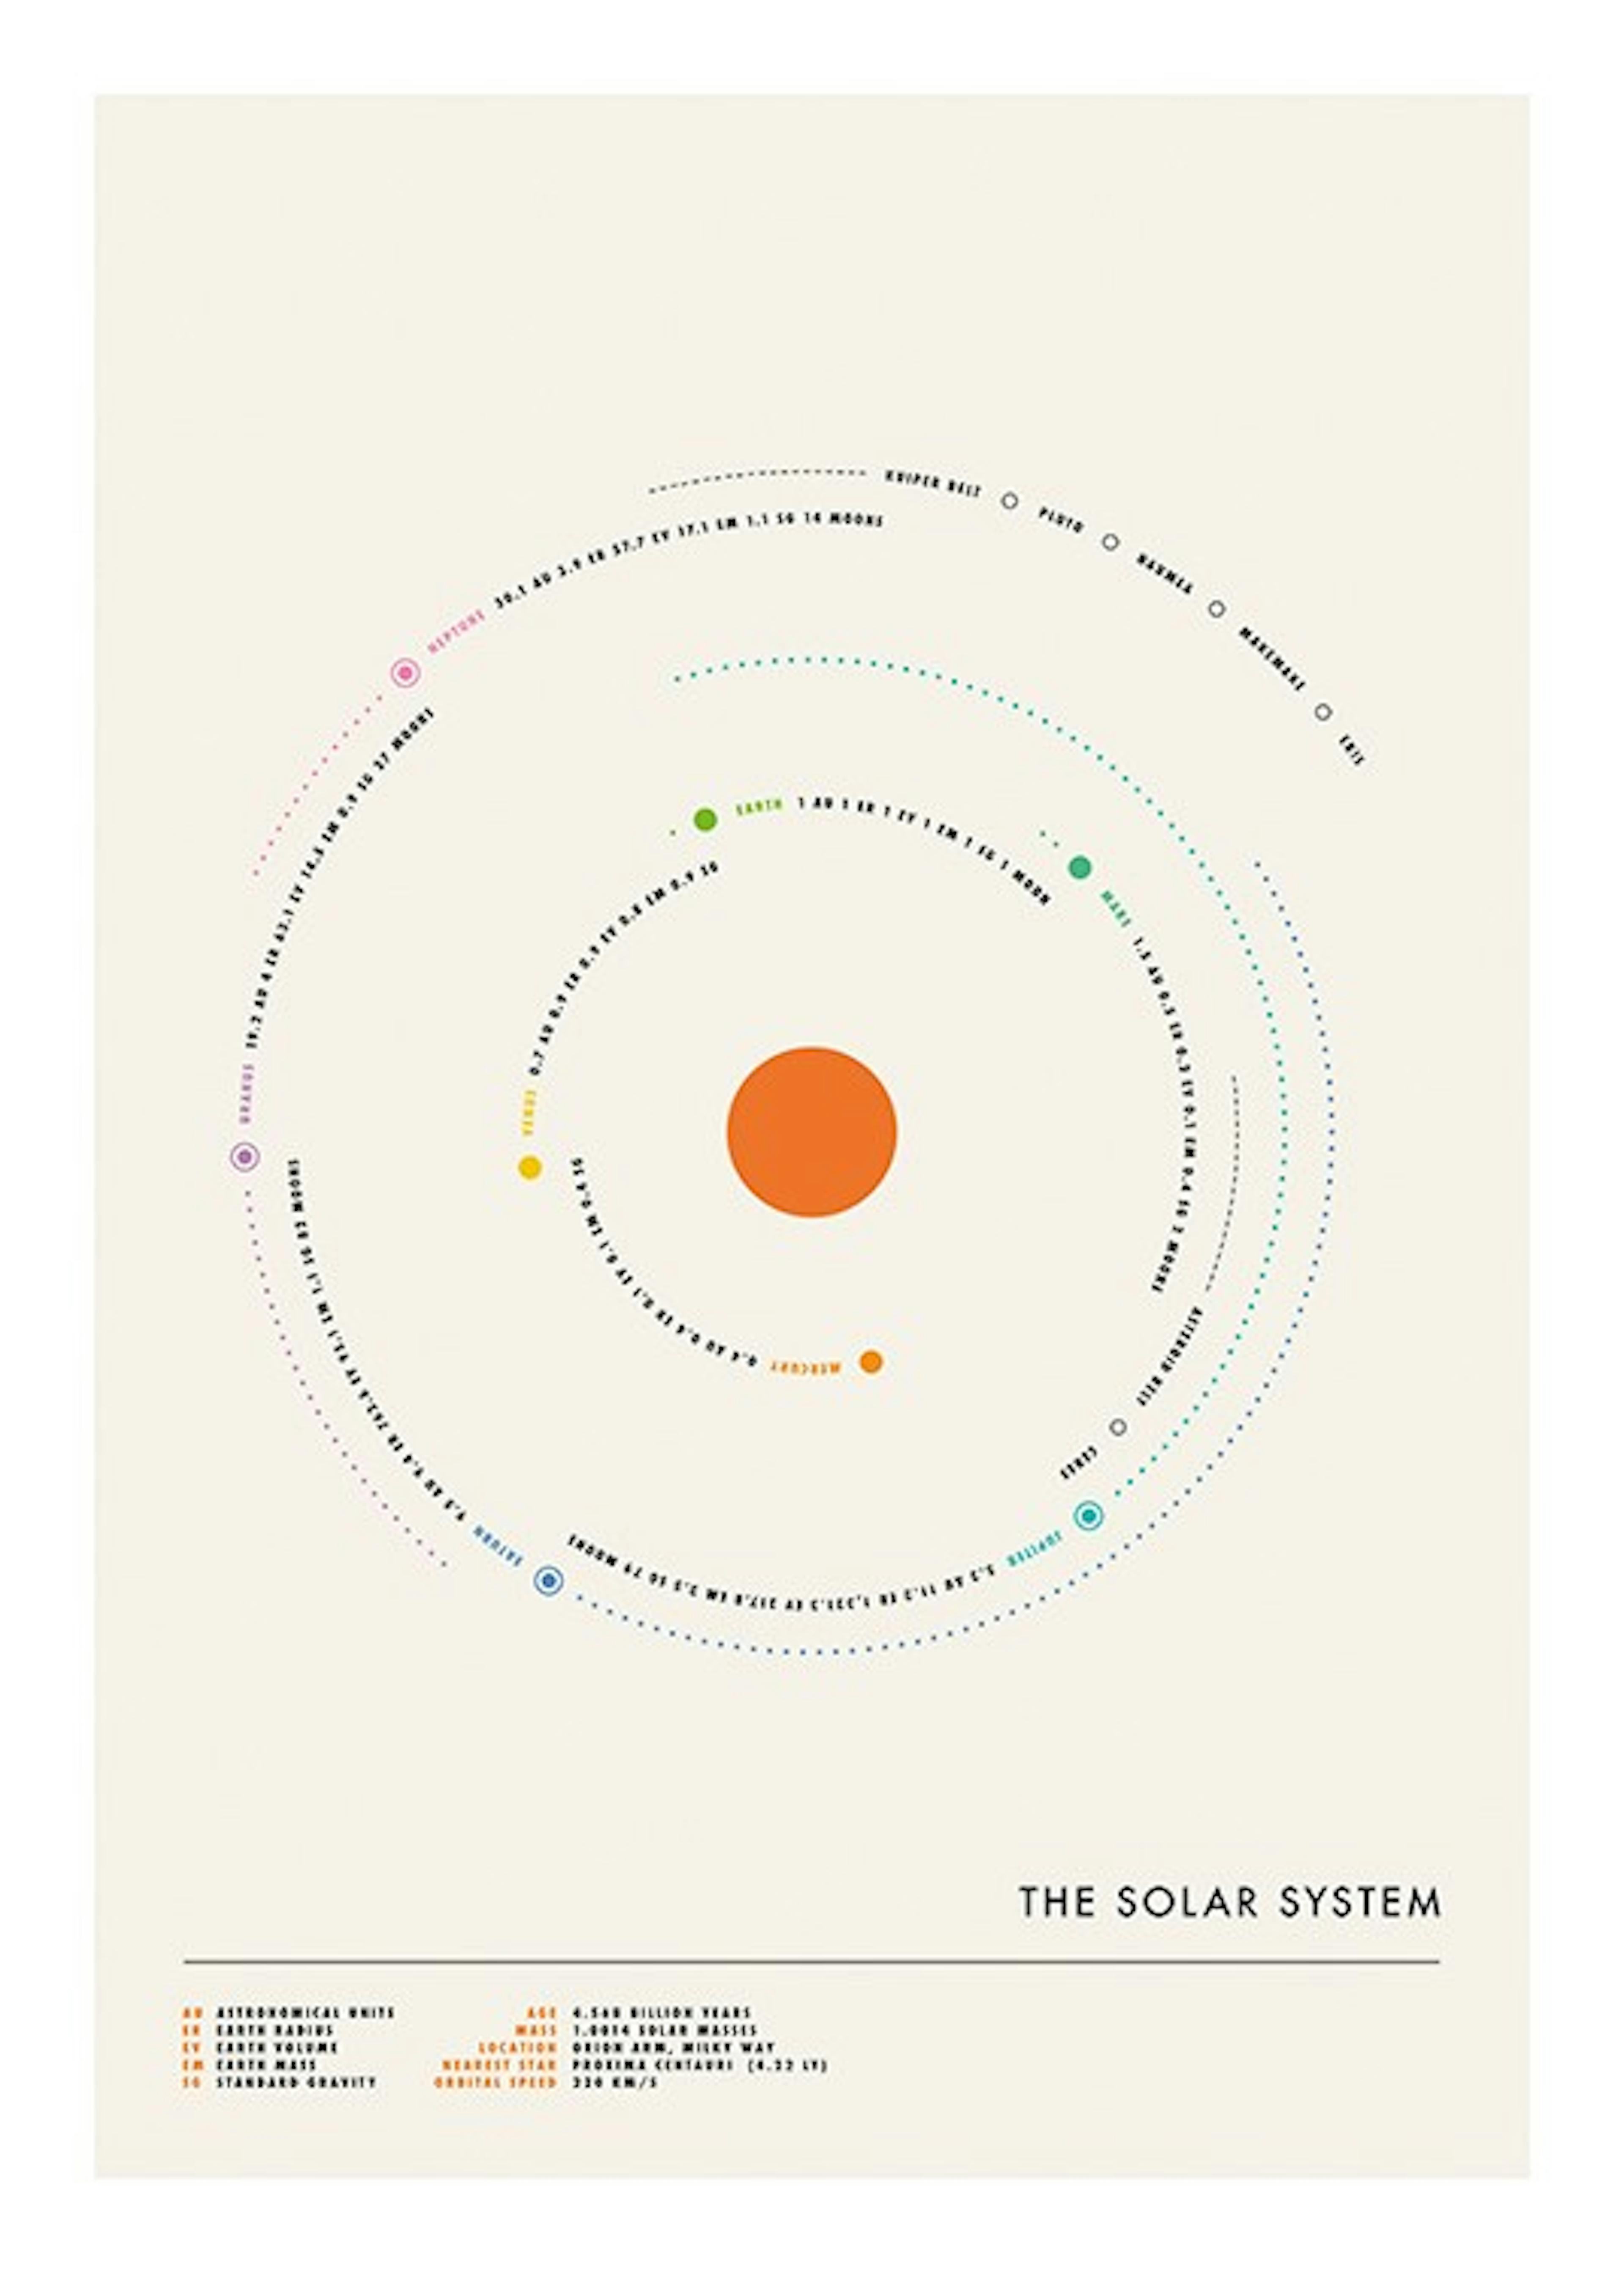 Jazzberry Blue - Minimal Solar System Poster 0